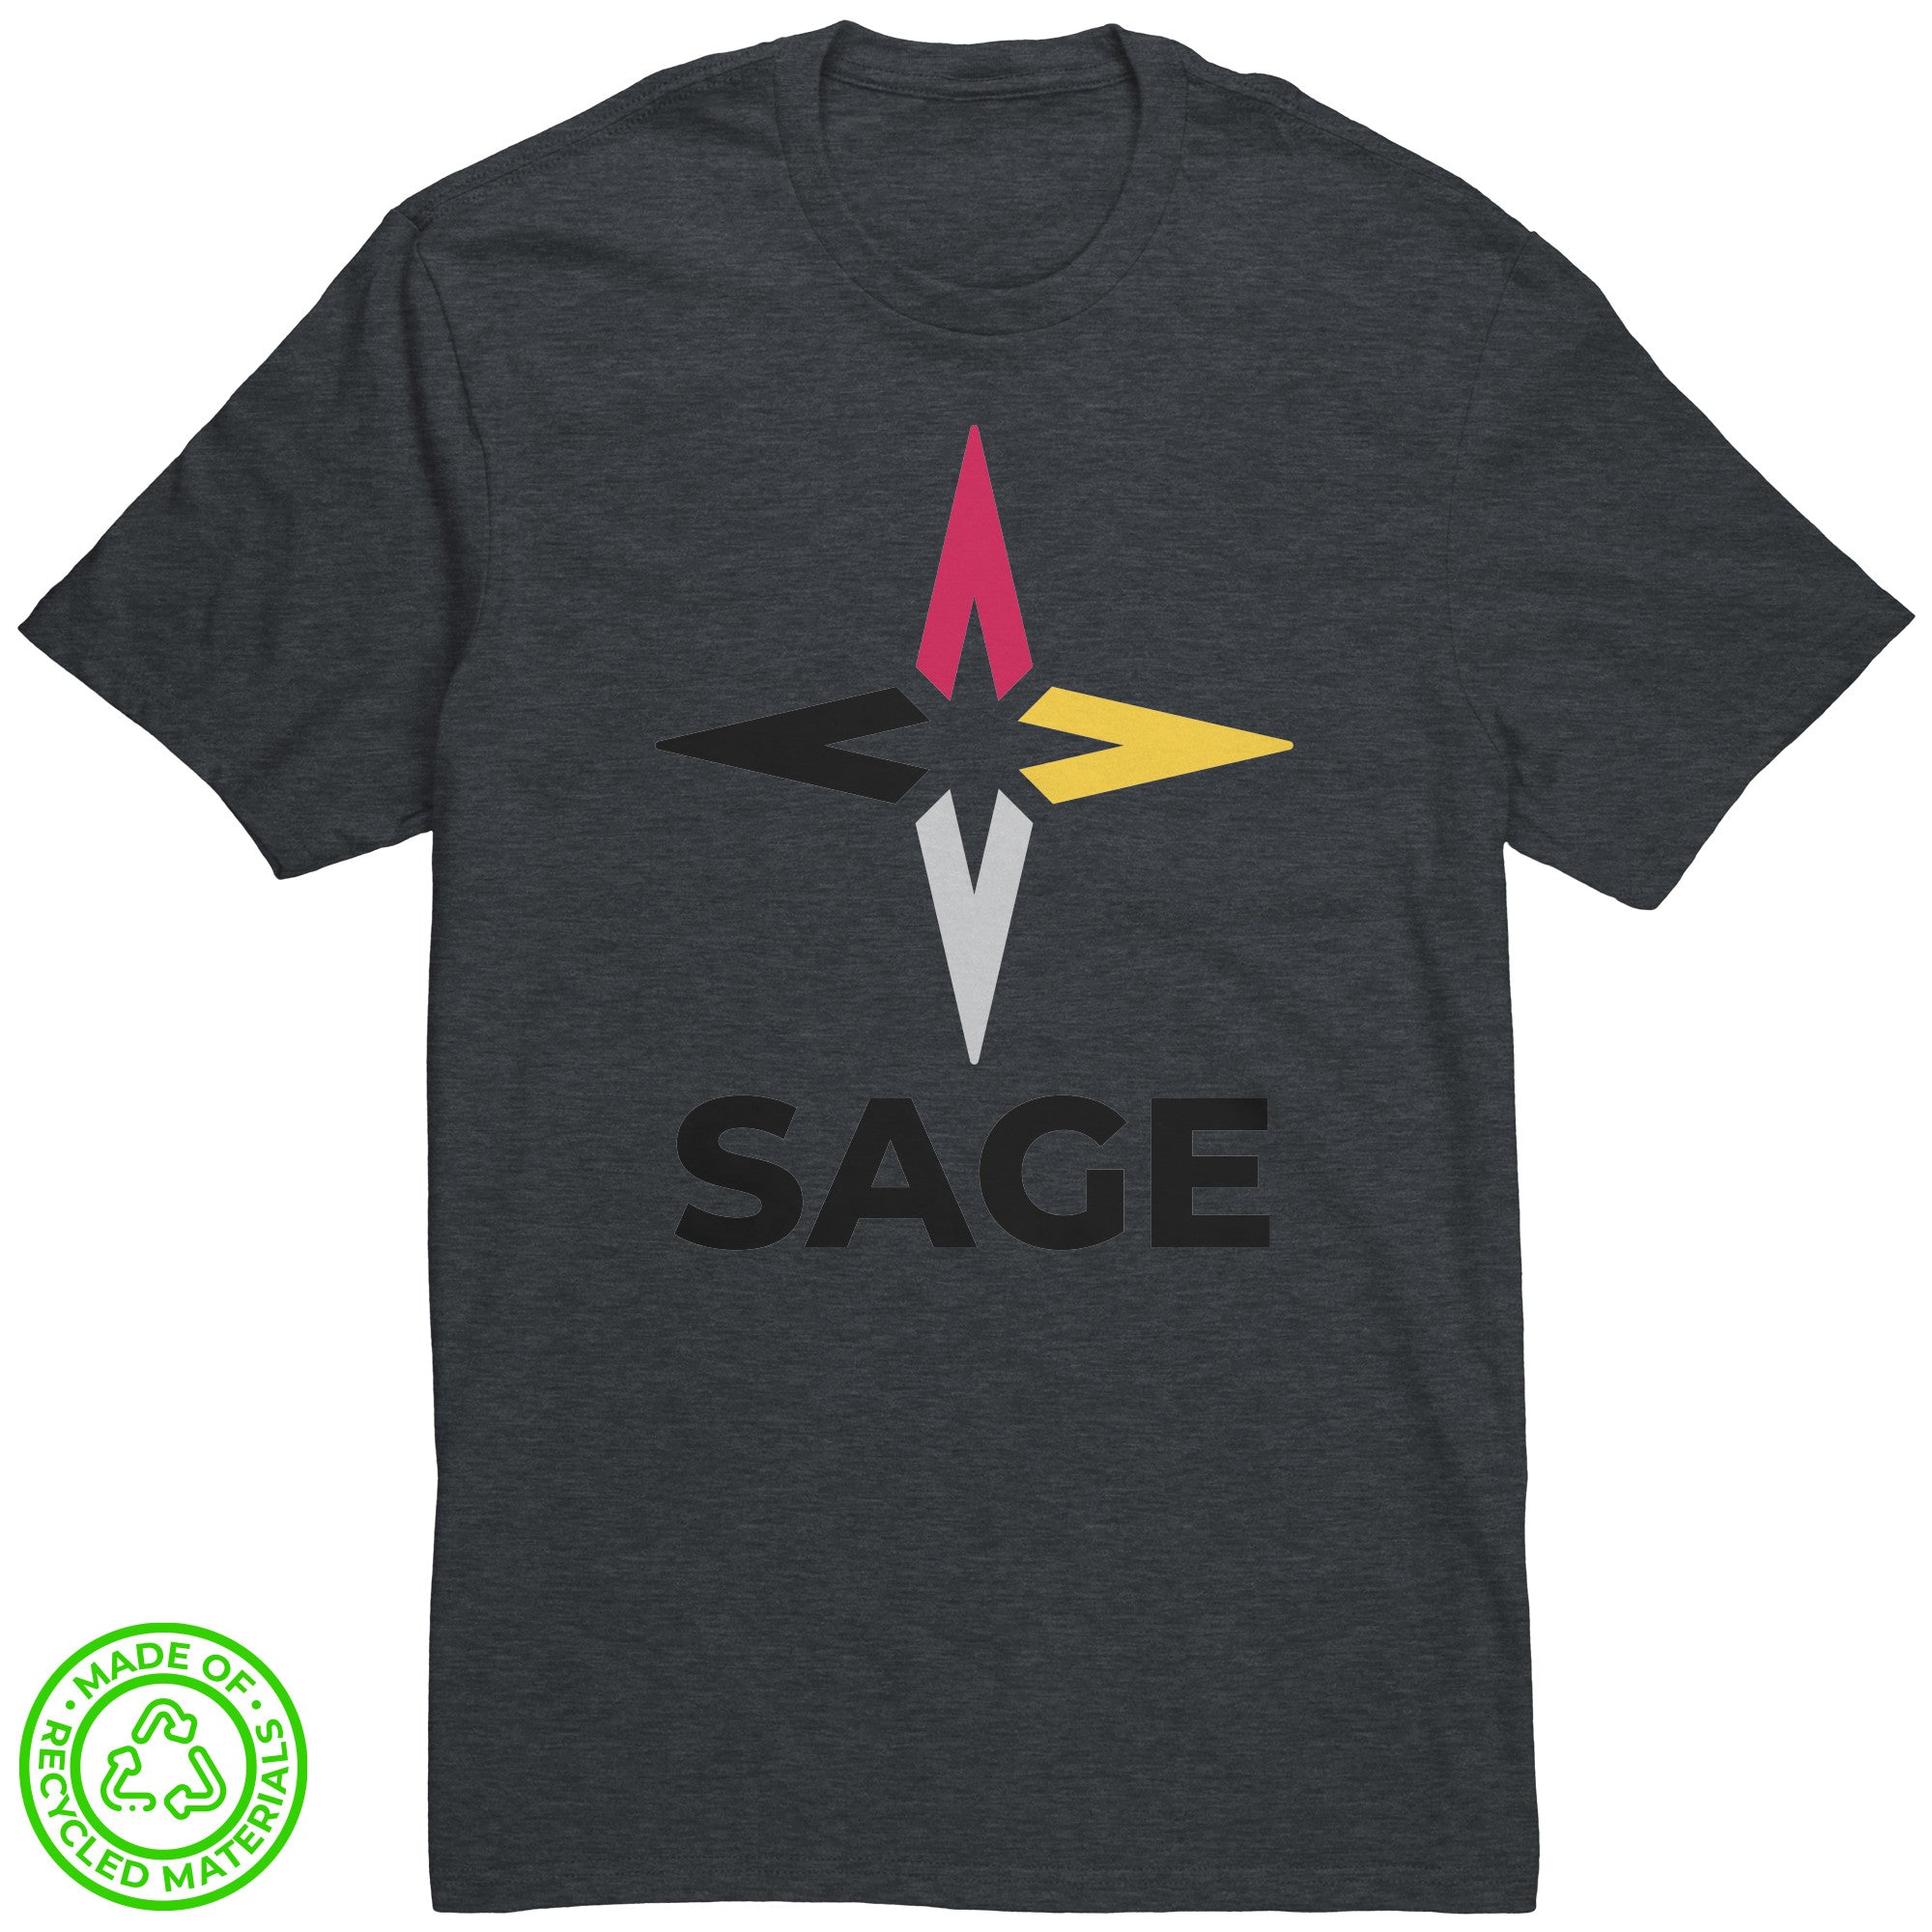 SAGE Tee Shirt